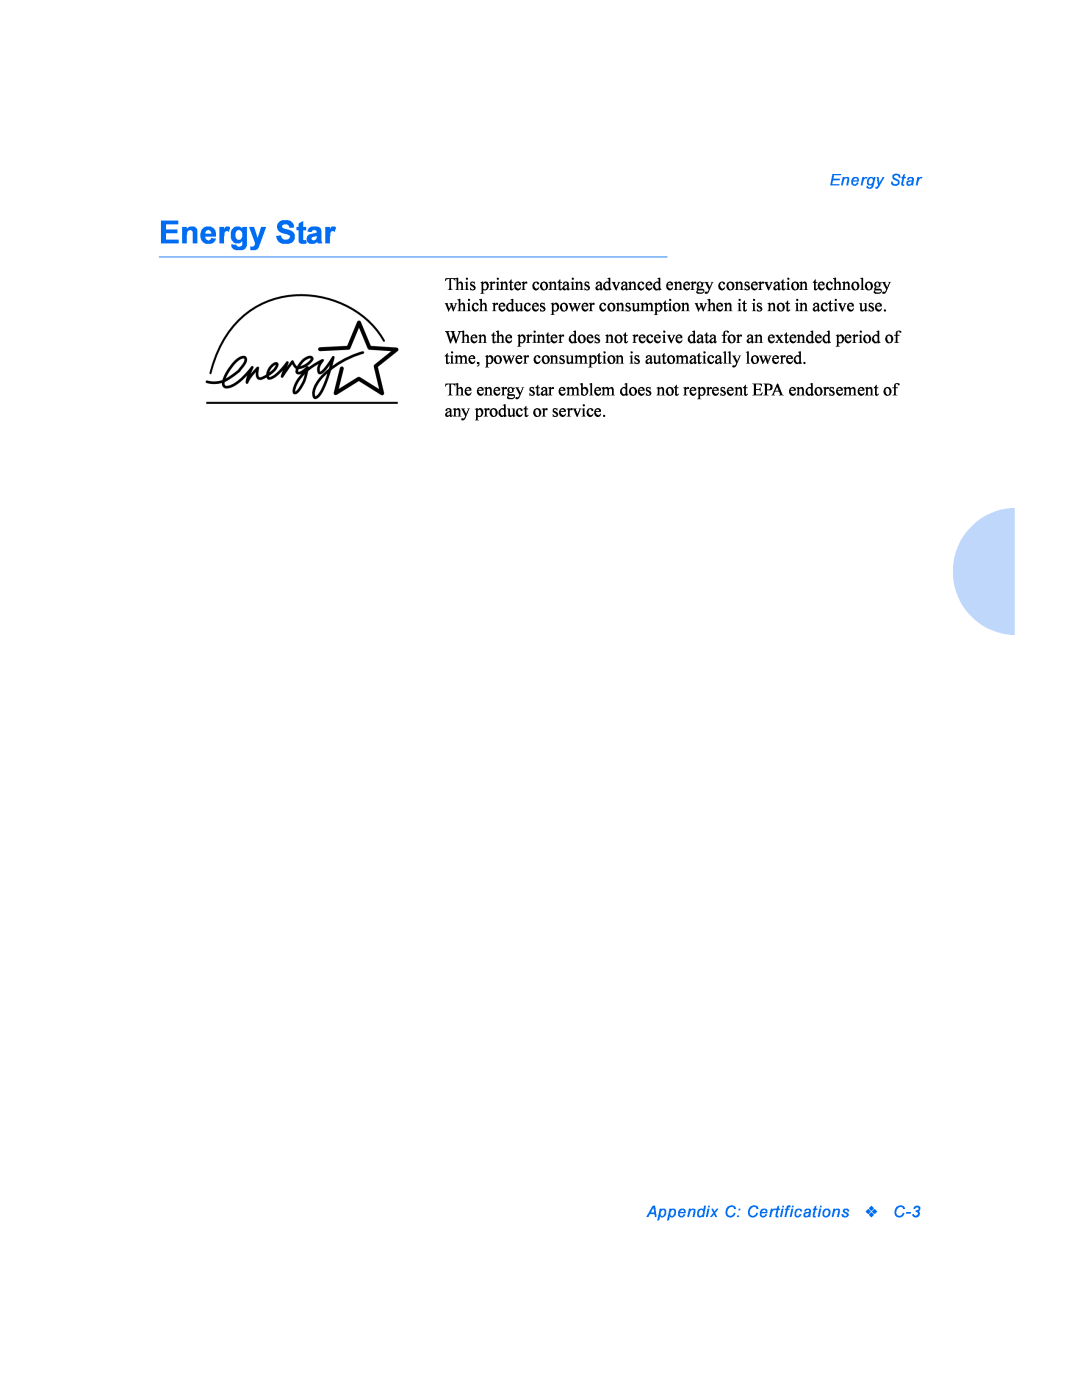 Xerox DocuPrint P8ex manual Energy Star, Appendix C: Certifications 